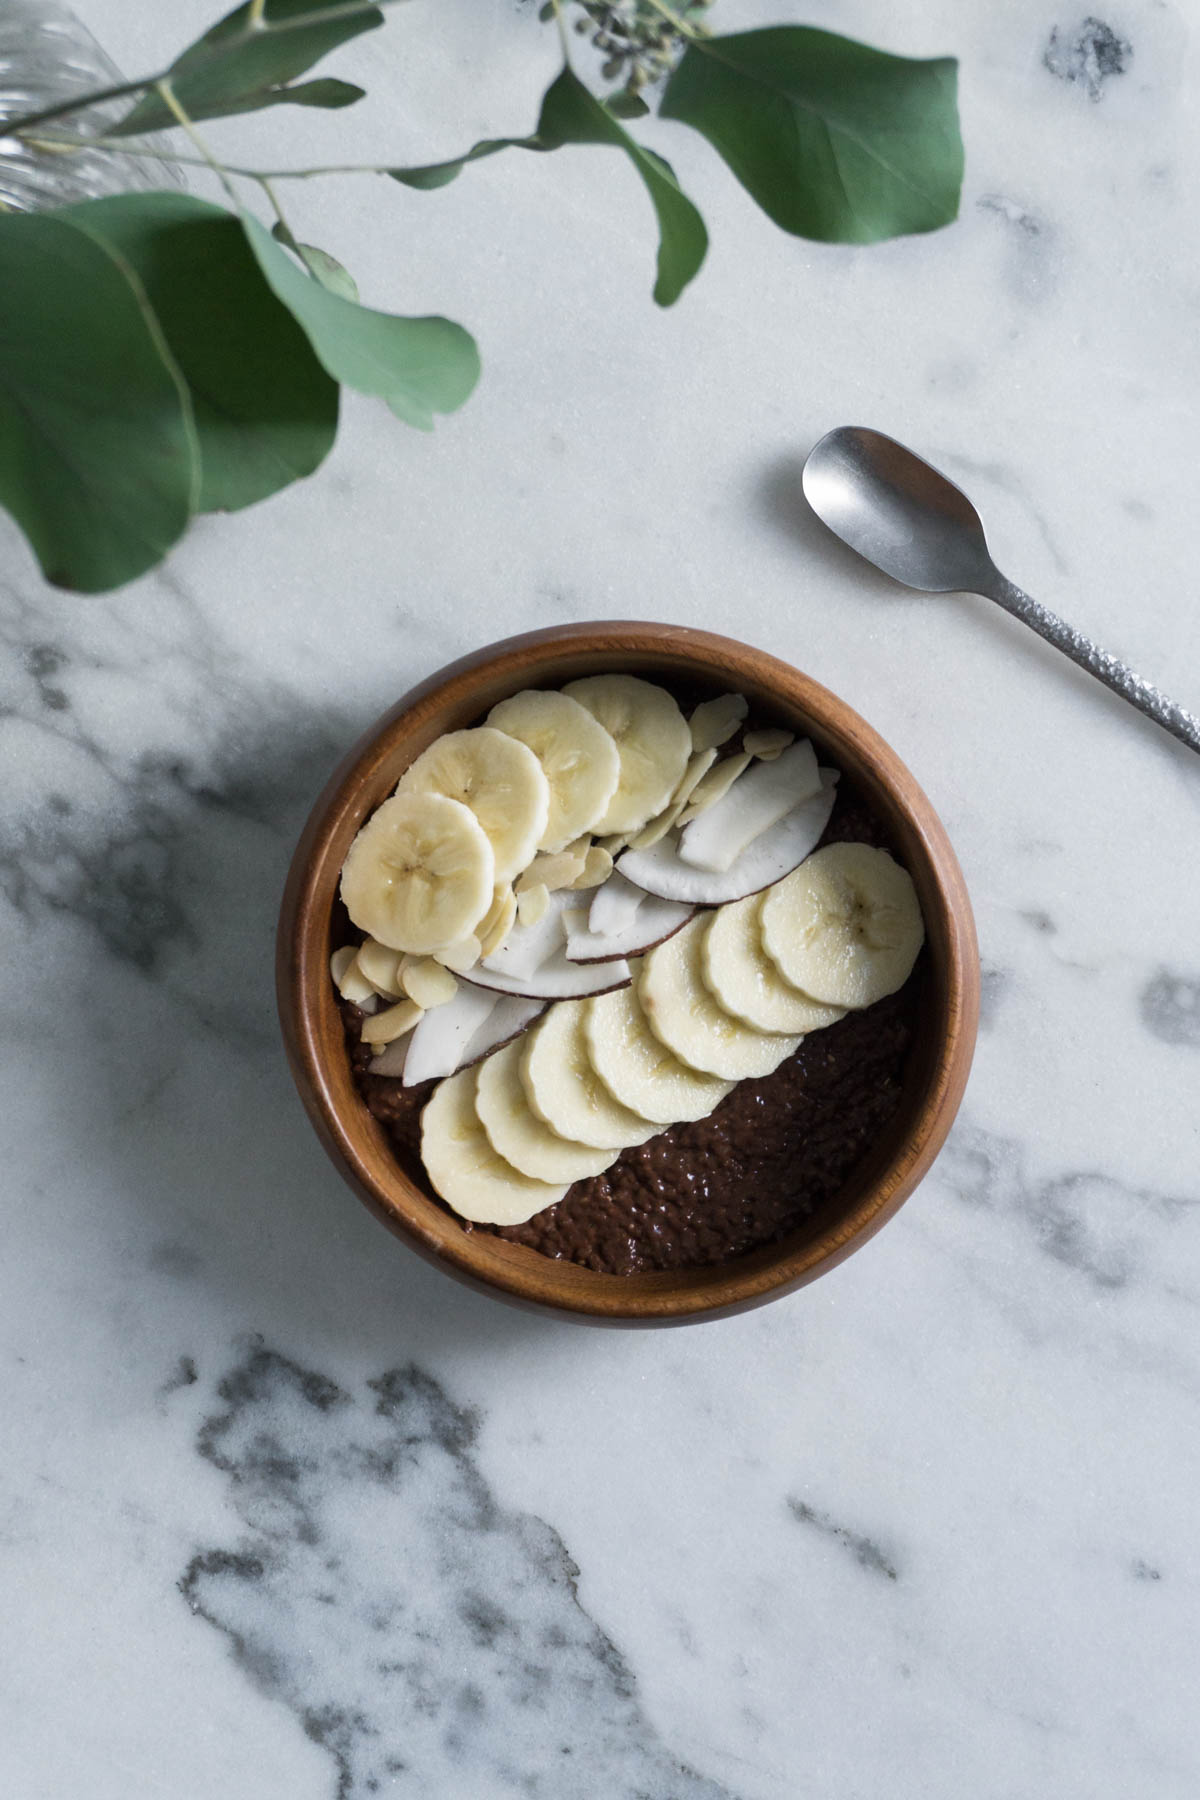 Coco Chia Pudding Recipe - Healthy Breakfast Bowl Ideas / RG Daily Blog